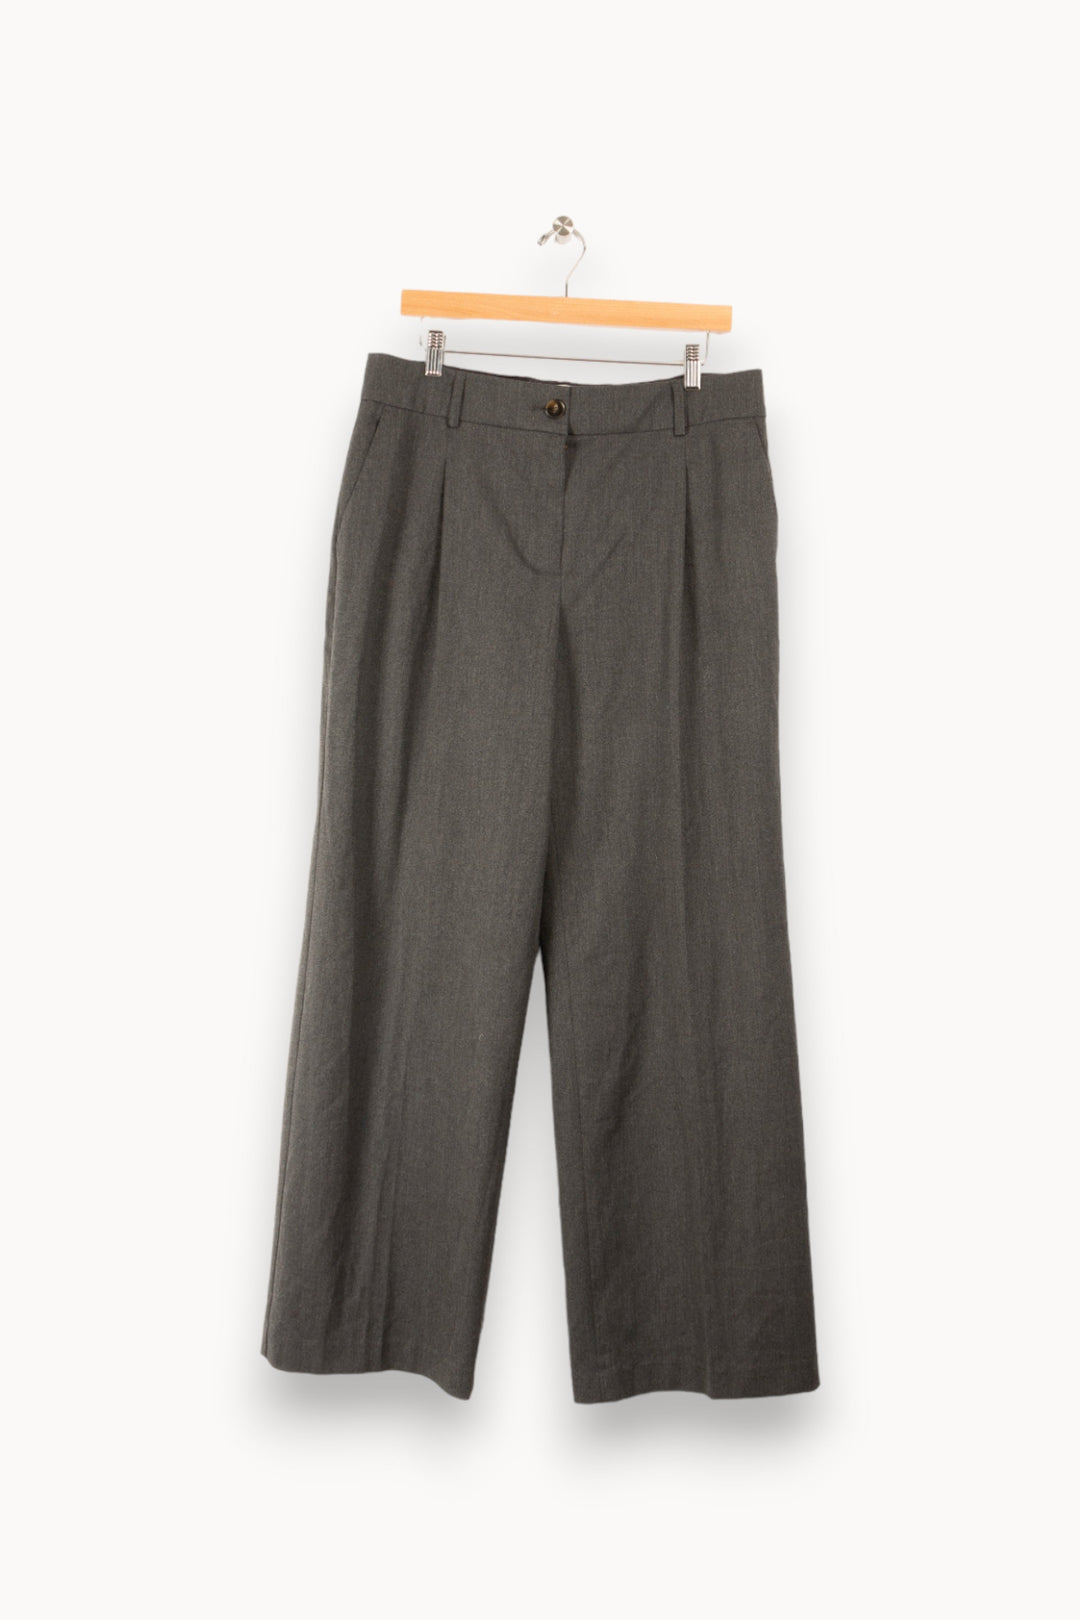 Pantalon gris - Taille XL/42